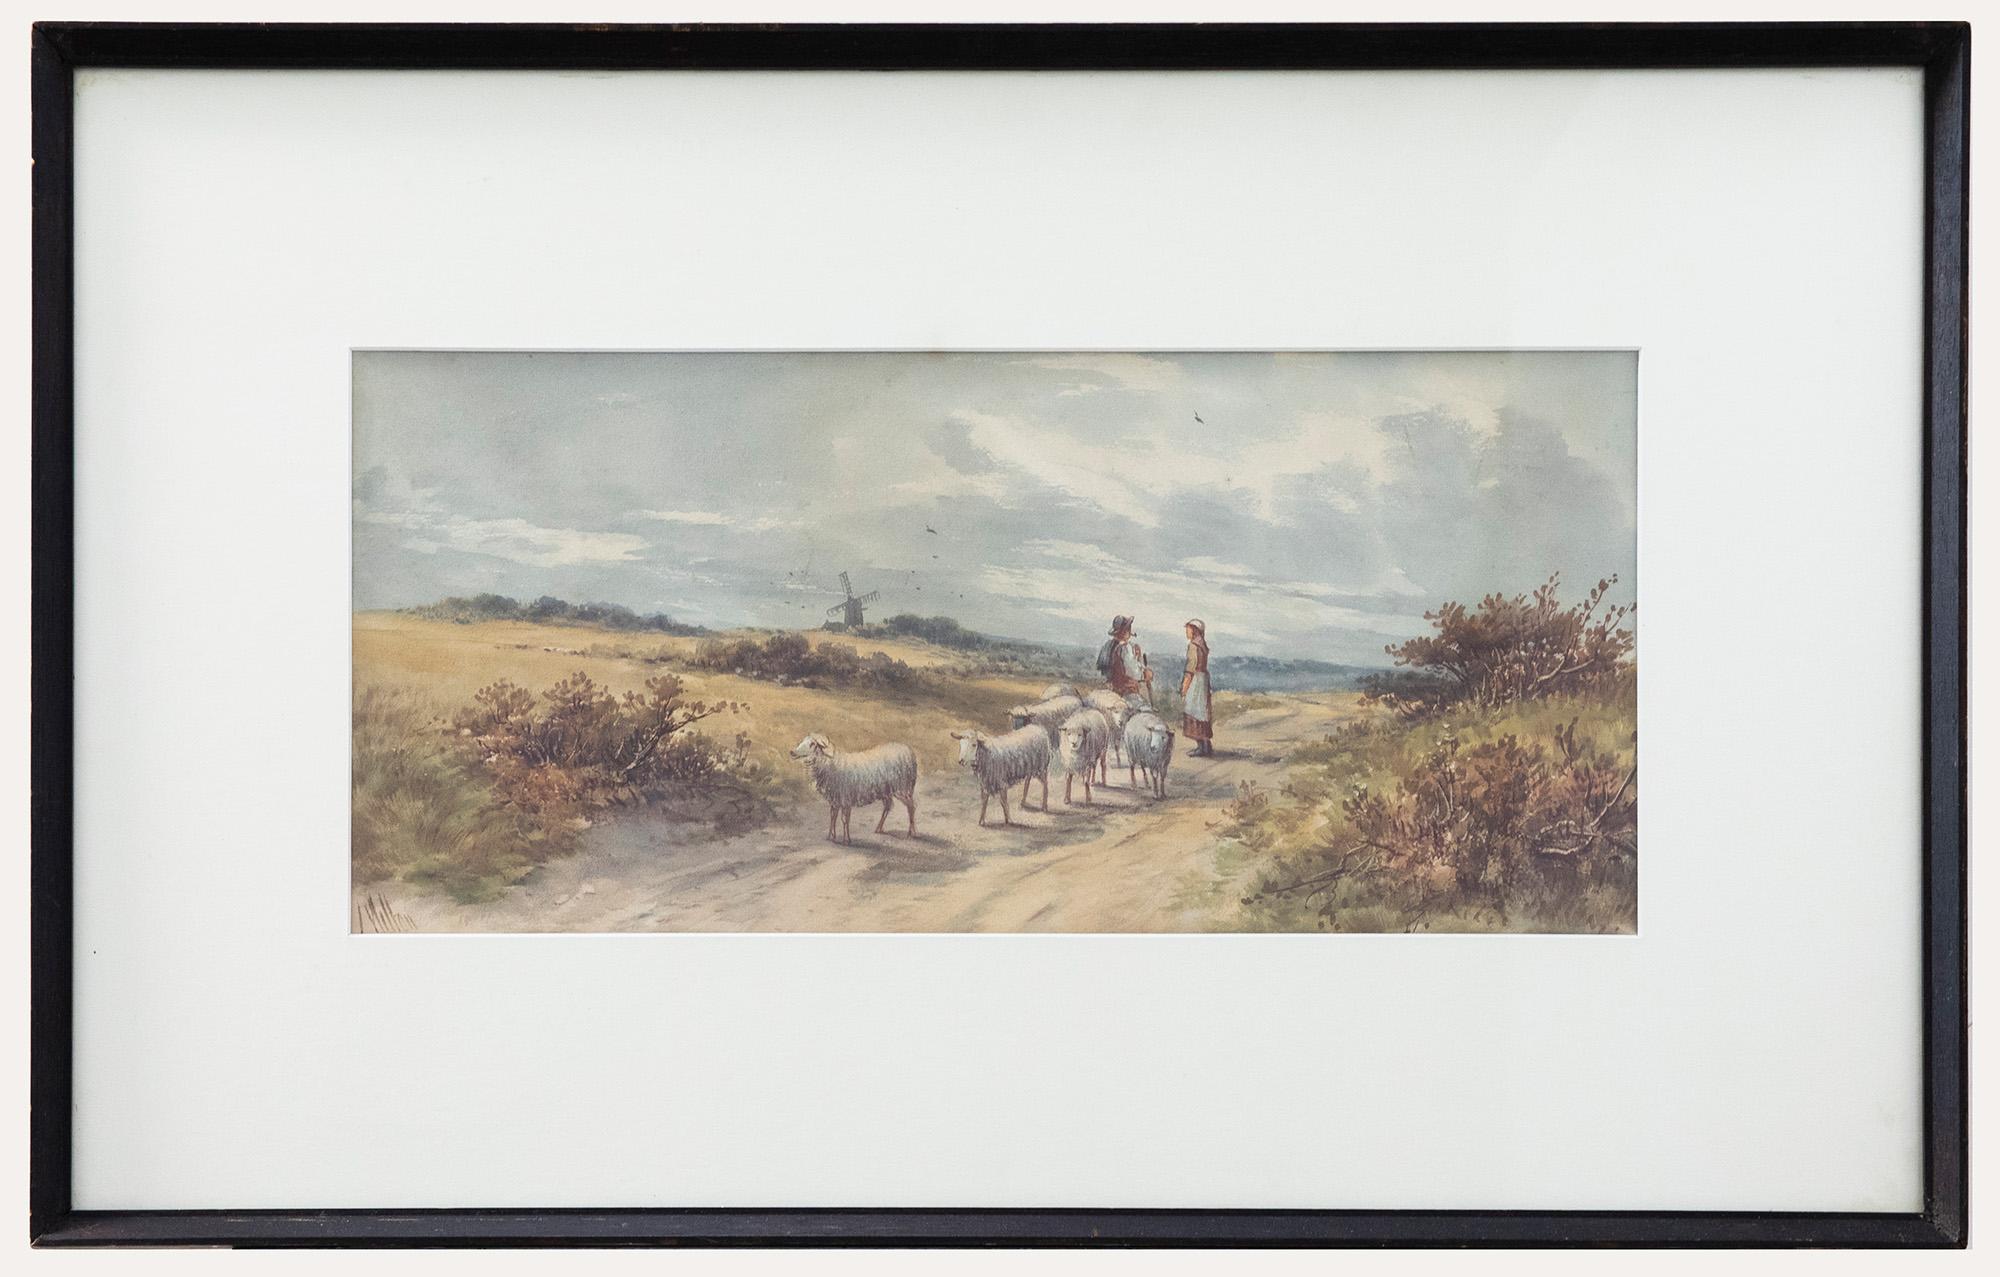 Unknown Landscape Art - L. Wilton - Late 19th Century Watercolour, Shepherd & Flock on a Country Lane